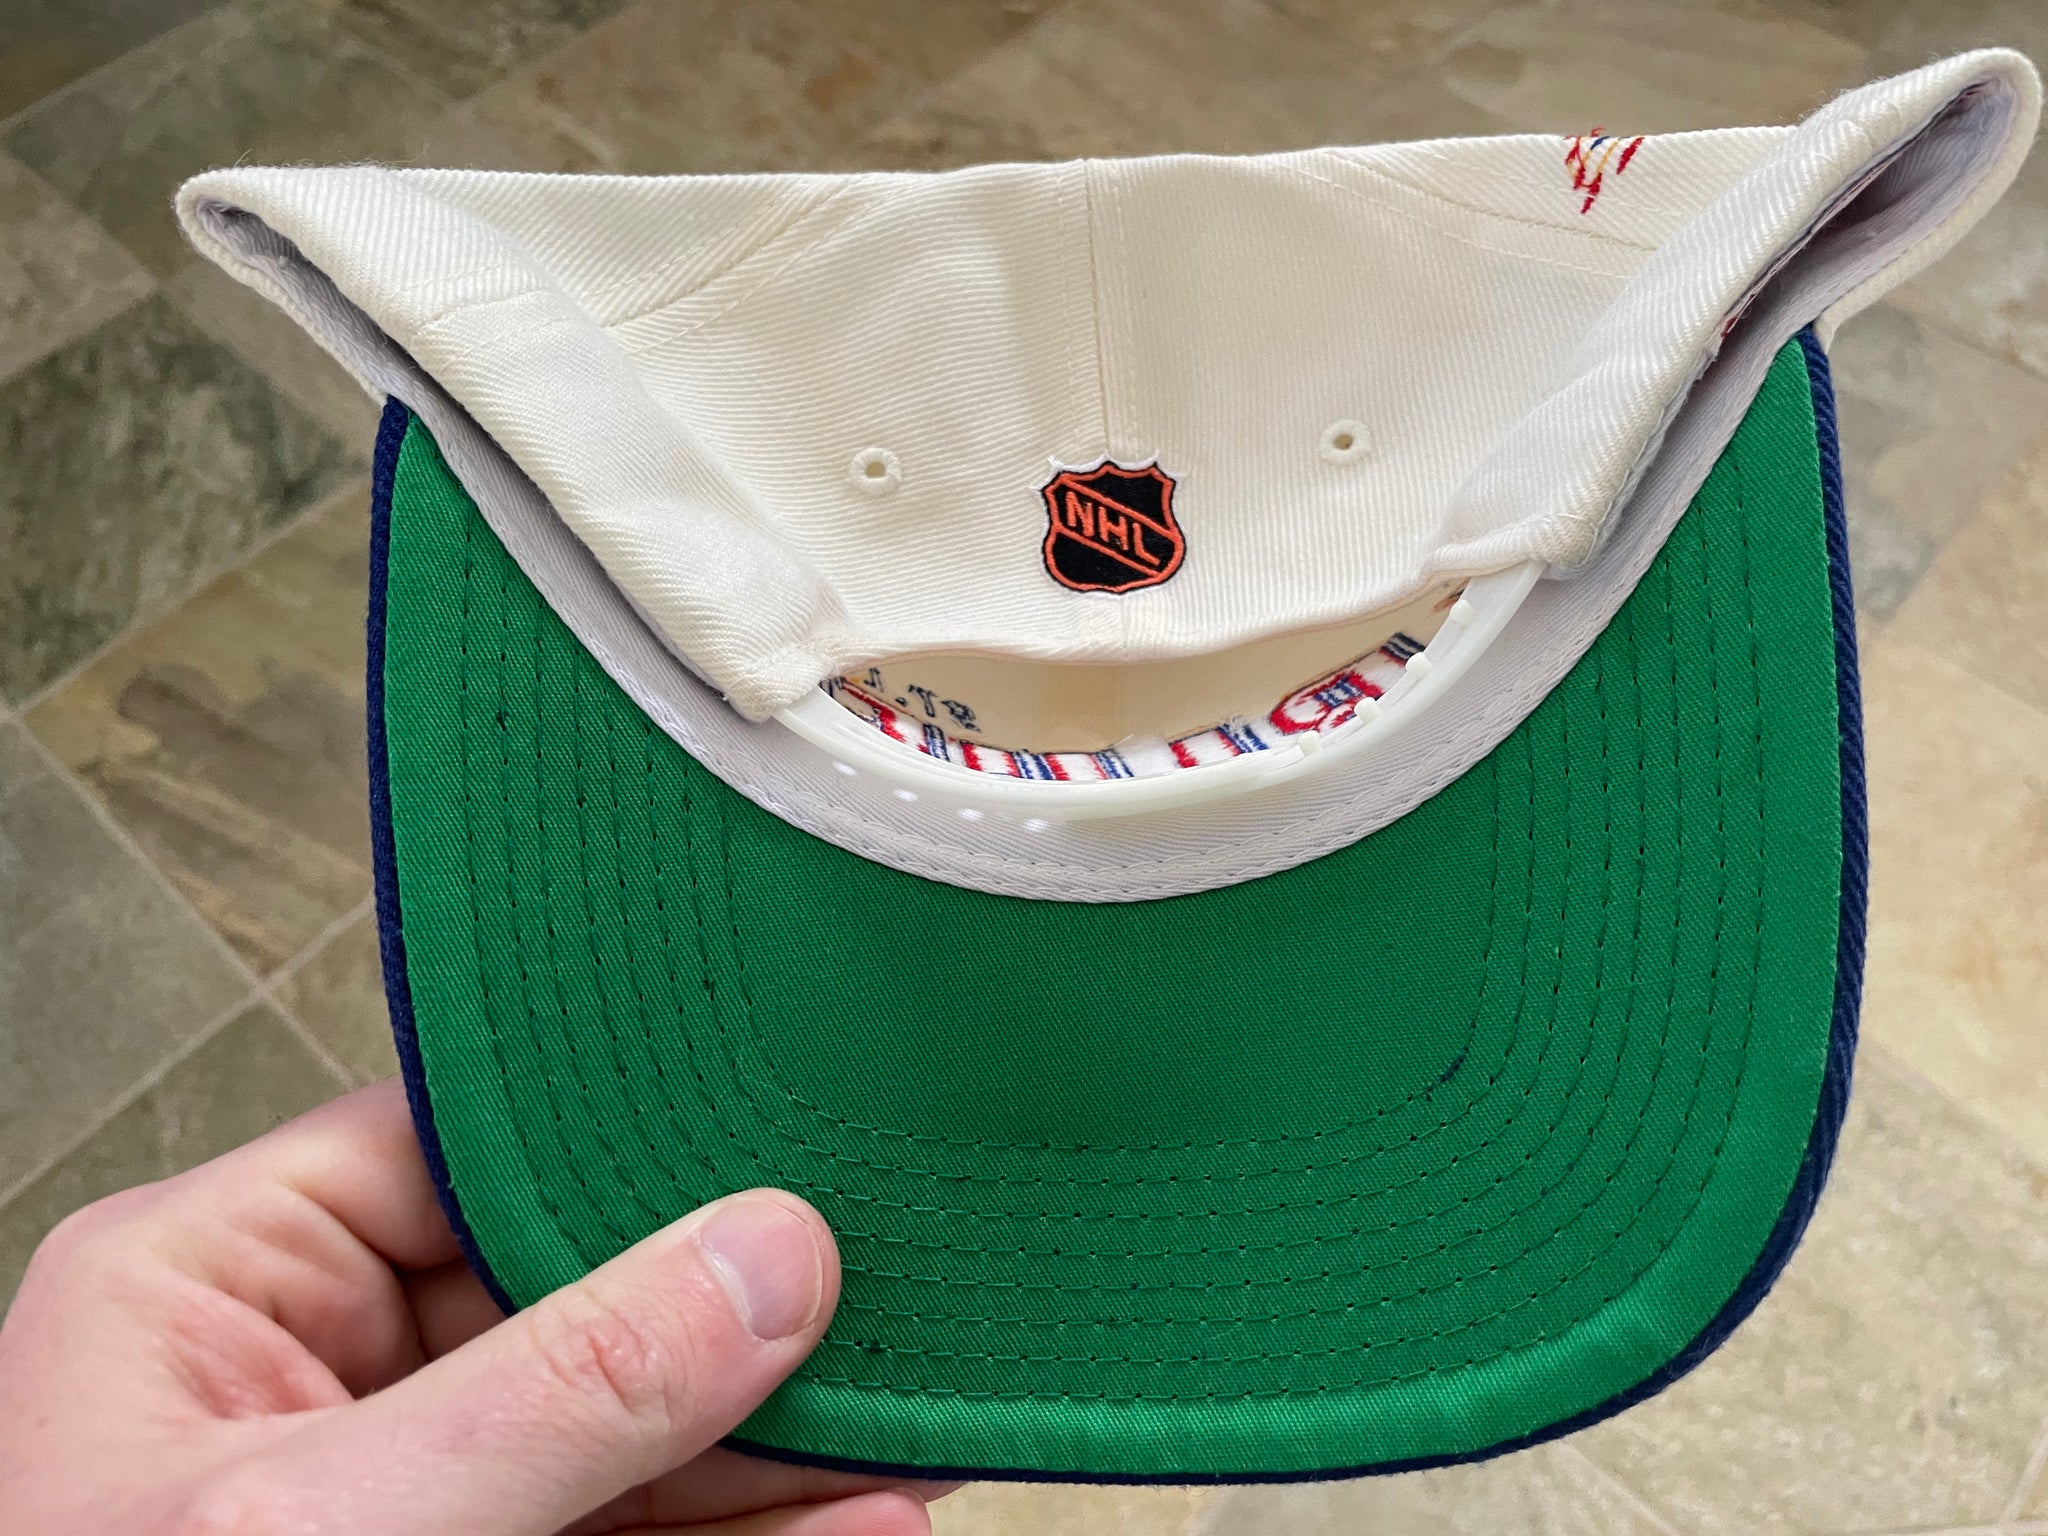 Vtg 90s St. Louis Blues Logo Athletic Snapback Hat Cap Shadow NHL